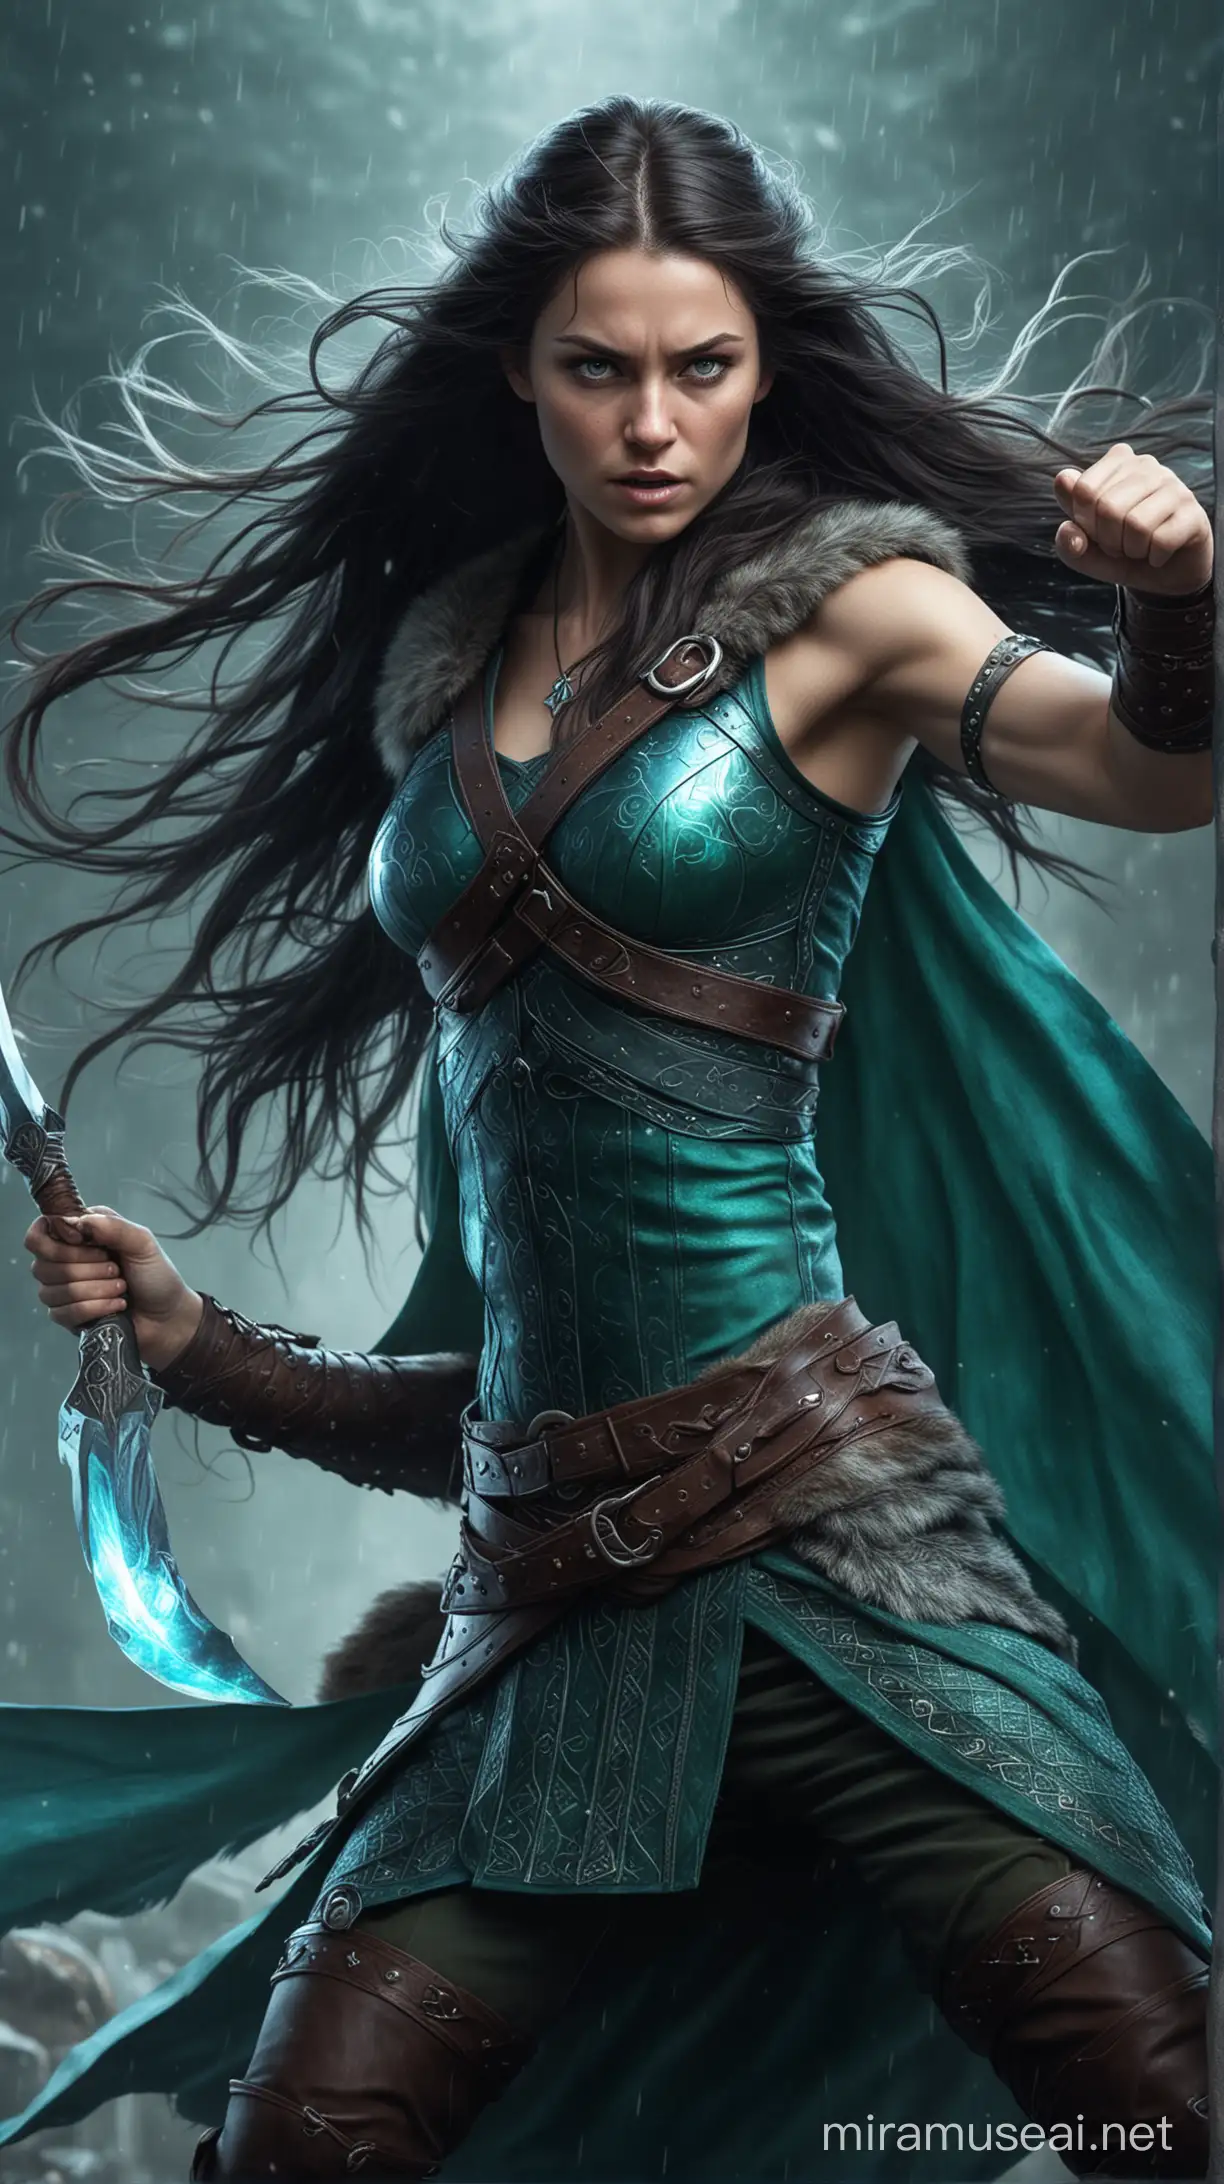 Fierce Female Viking Warrior with Iridescent BlueGreen Hair in Battle Stance